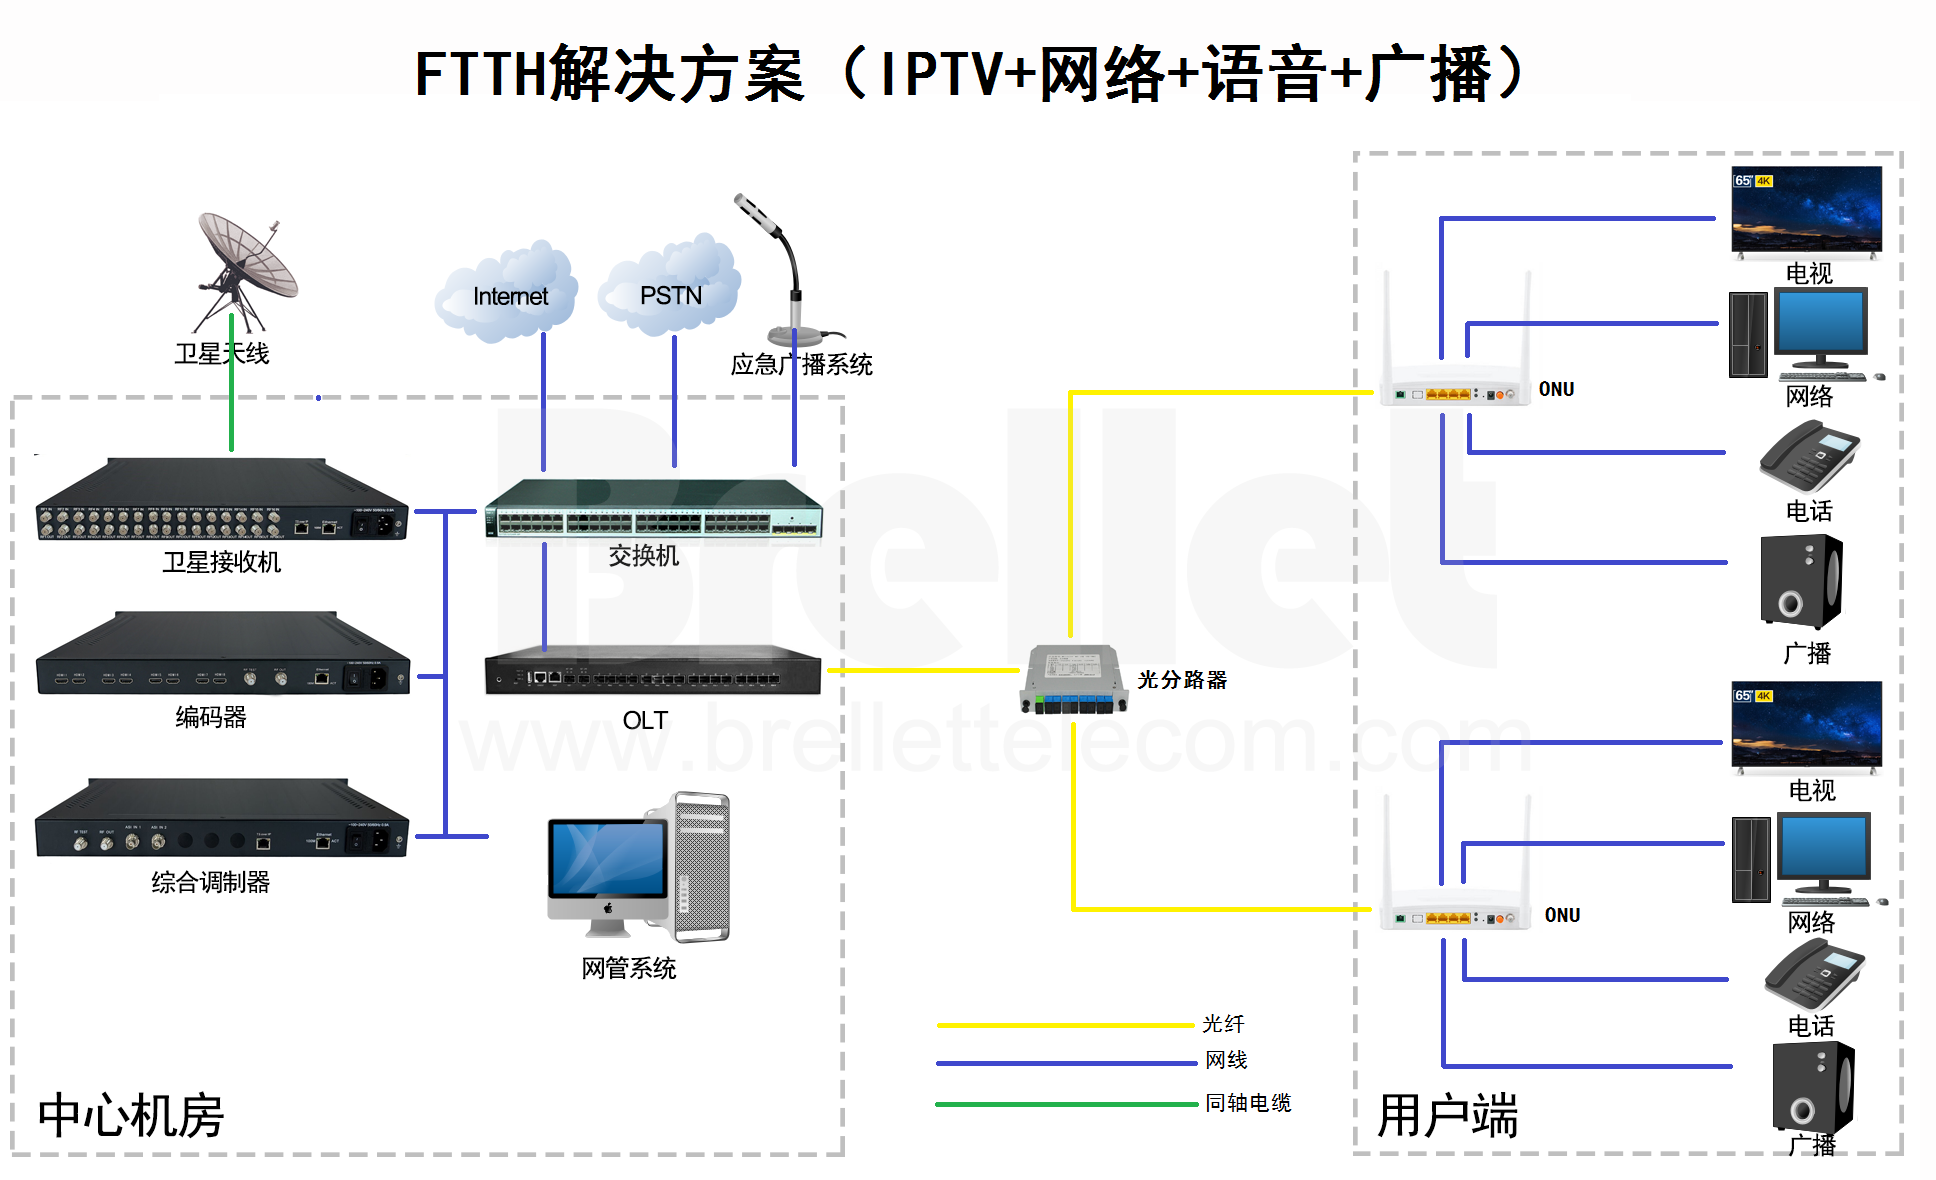 <b>FTTH 解决方案（IPTV+网络+语音+广播）</b>